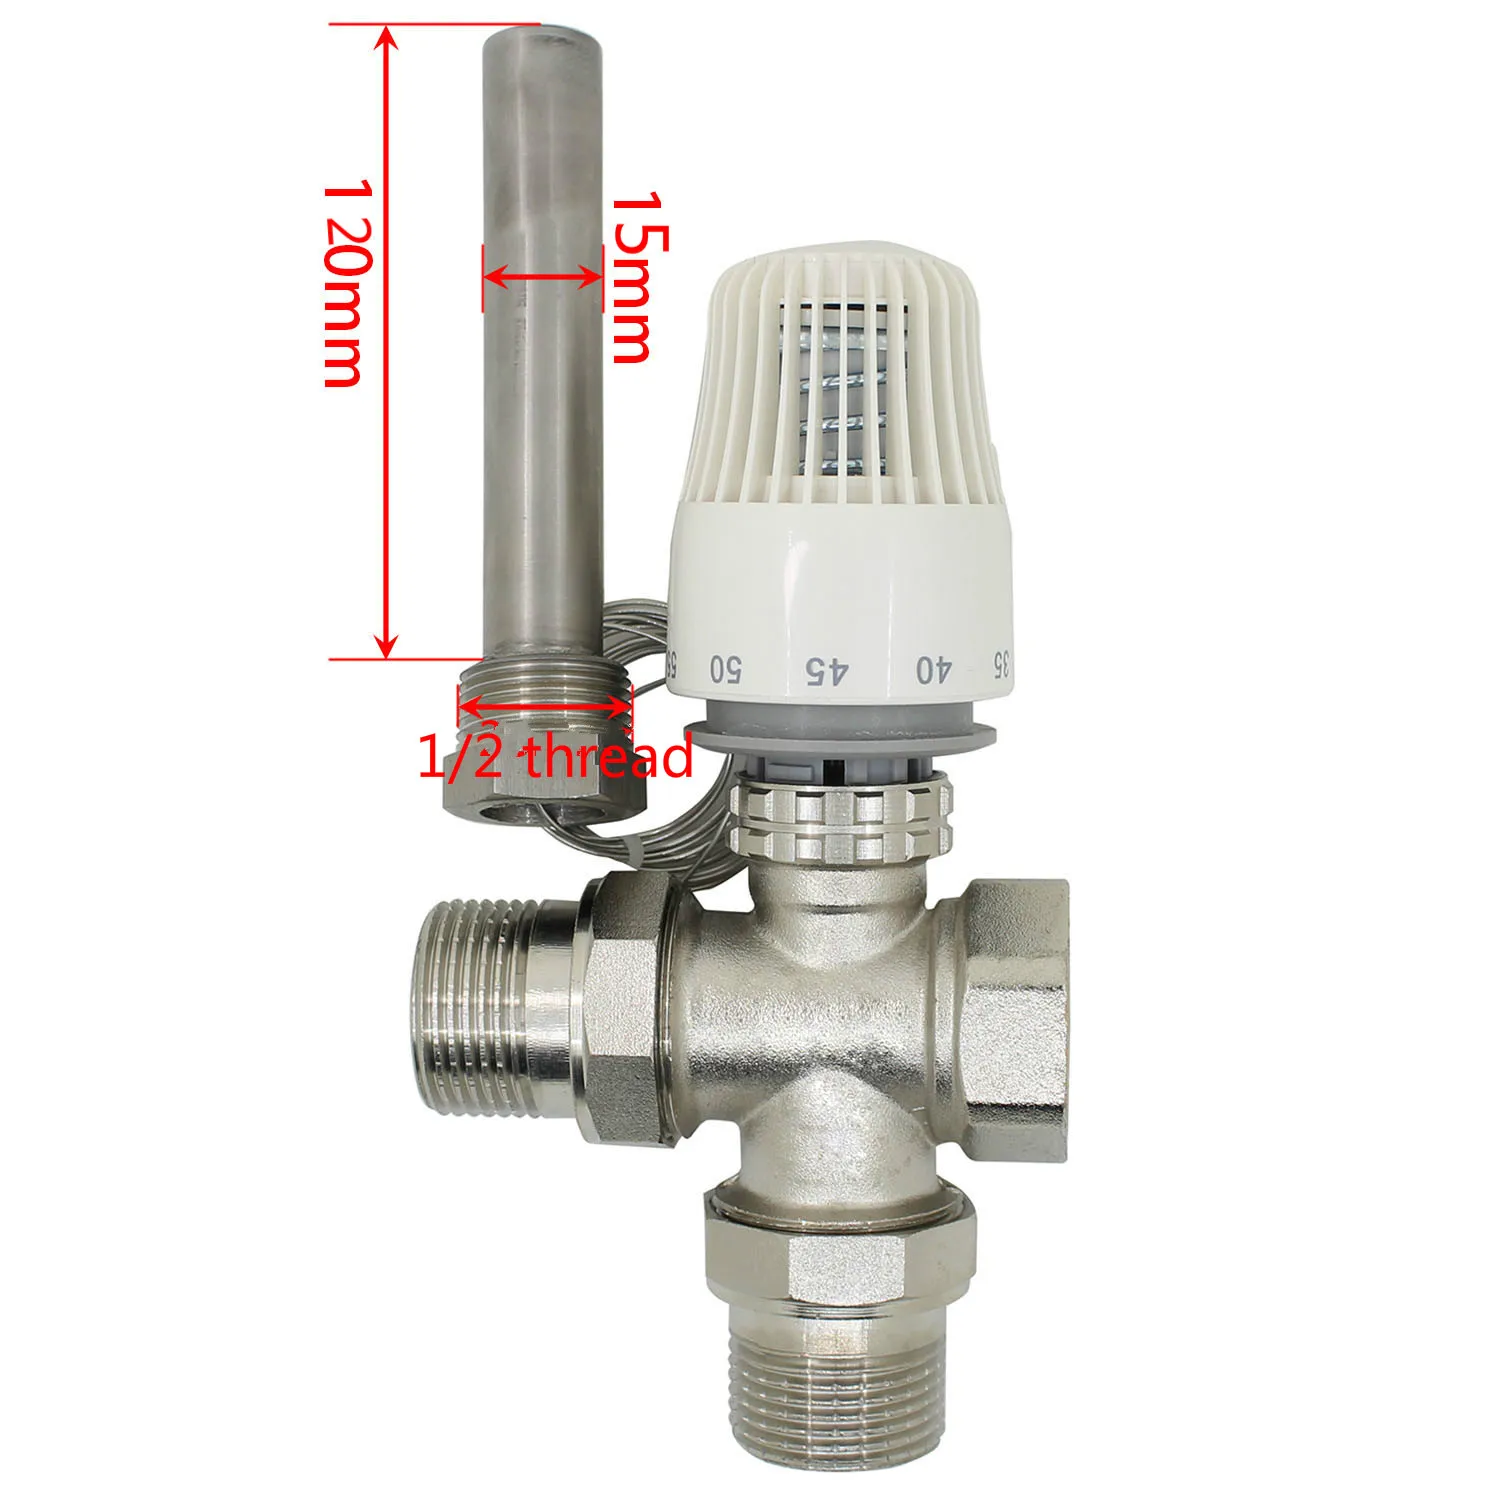 30-70 degree control Floor heating system thermostatic radiator valve M30*1.5 Three way valve Thermowell DN15 DN20 DN25 DN32